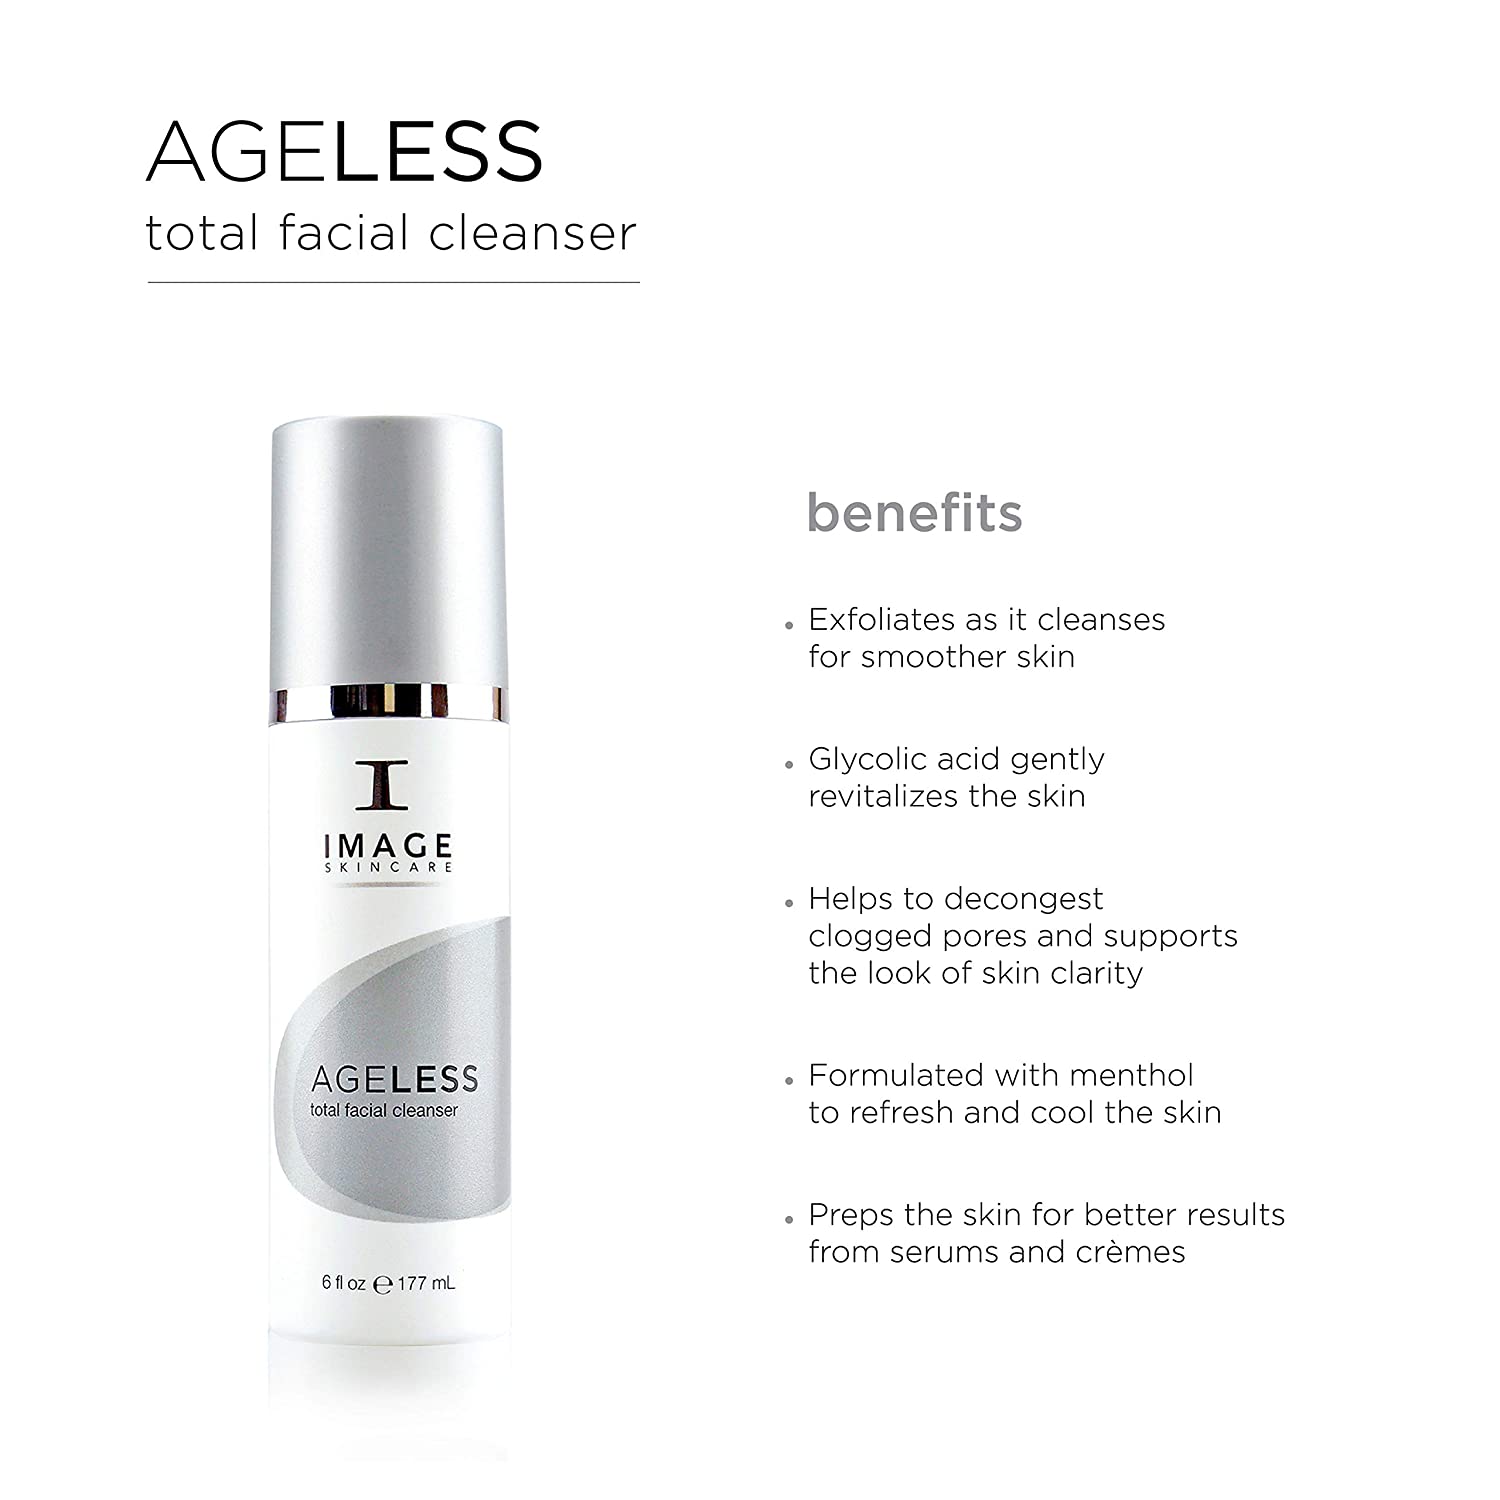 Image Skincare Ag eless Total Facial Clean ser 6 oz - image 3 of 7